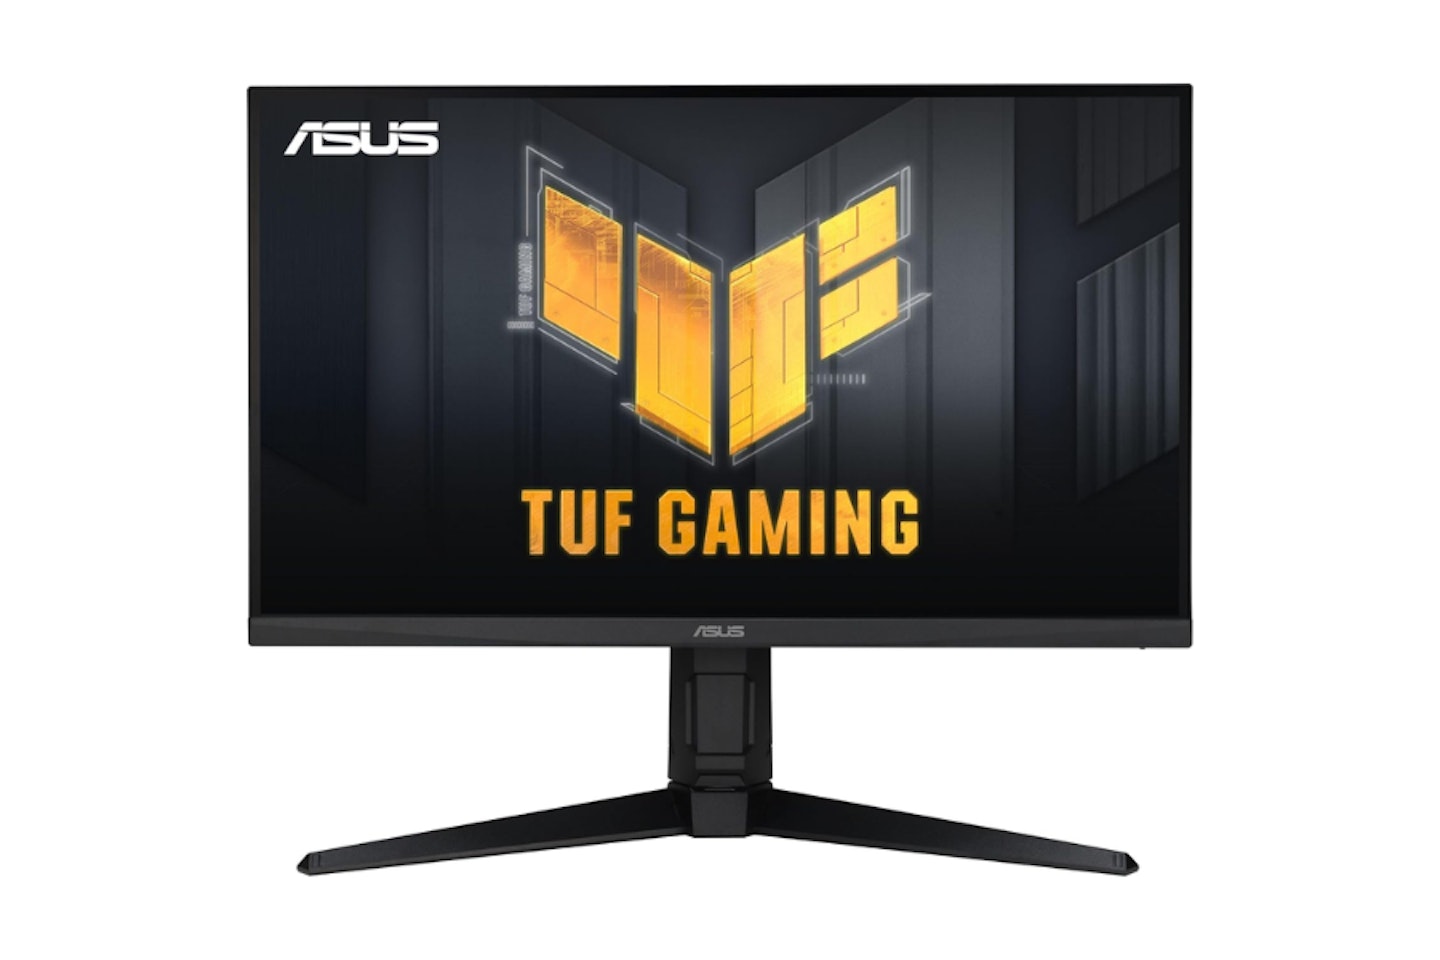 ASUS TUF Gaming 27-inch 1440P Monitor